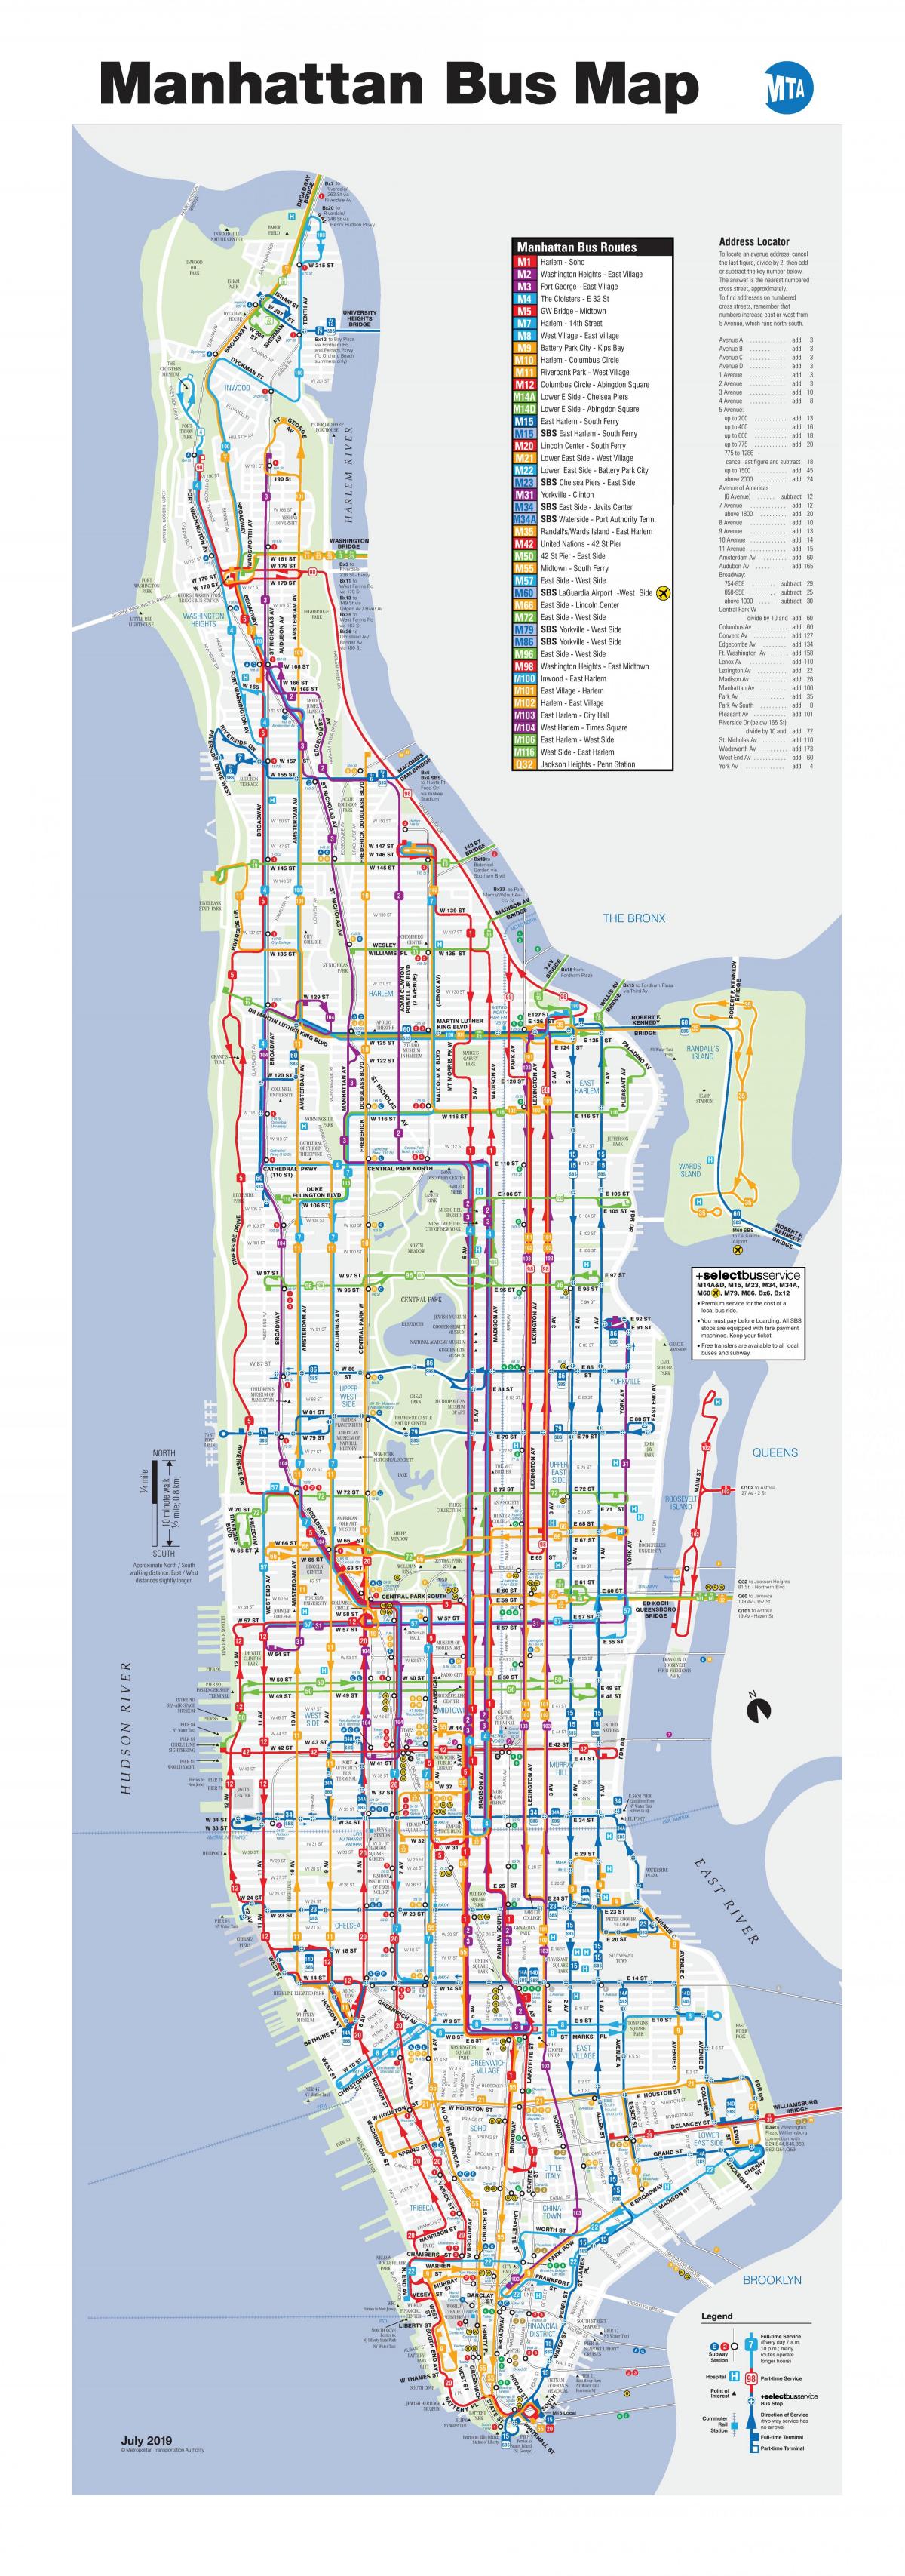 Plan des stations bus de Manhattan